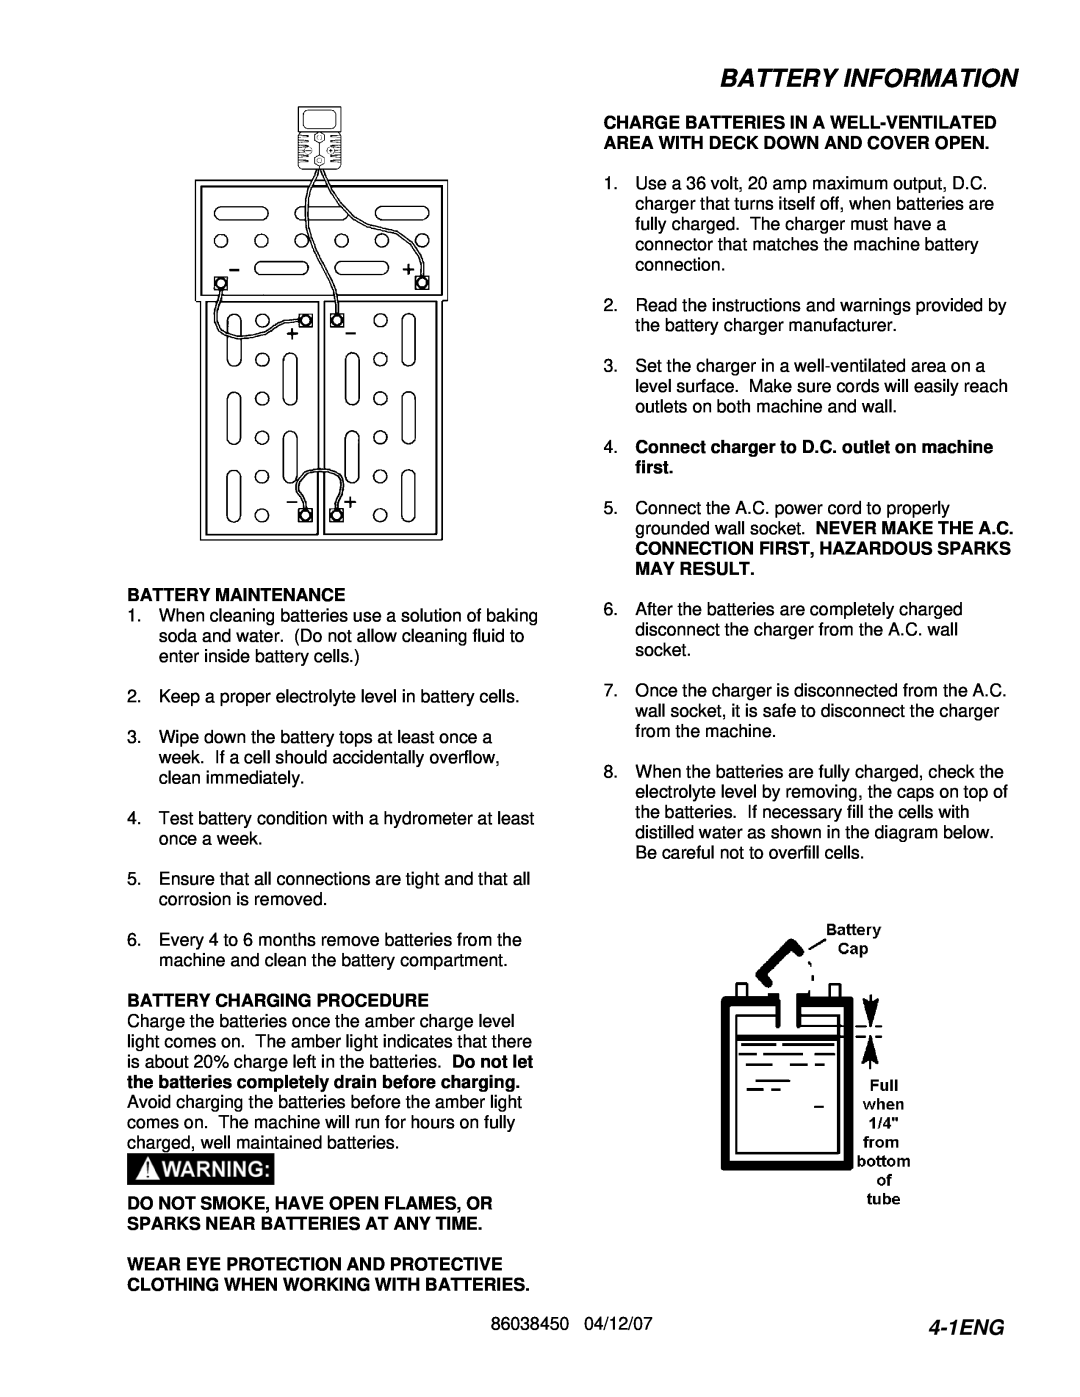 Windsor L20T, 10027110, 10027100 manual Battery Information, 4-1ENG, Battery Maintenance, Battery Charging Procedure 